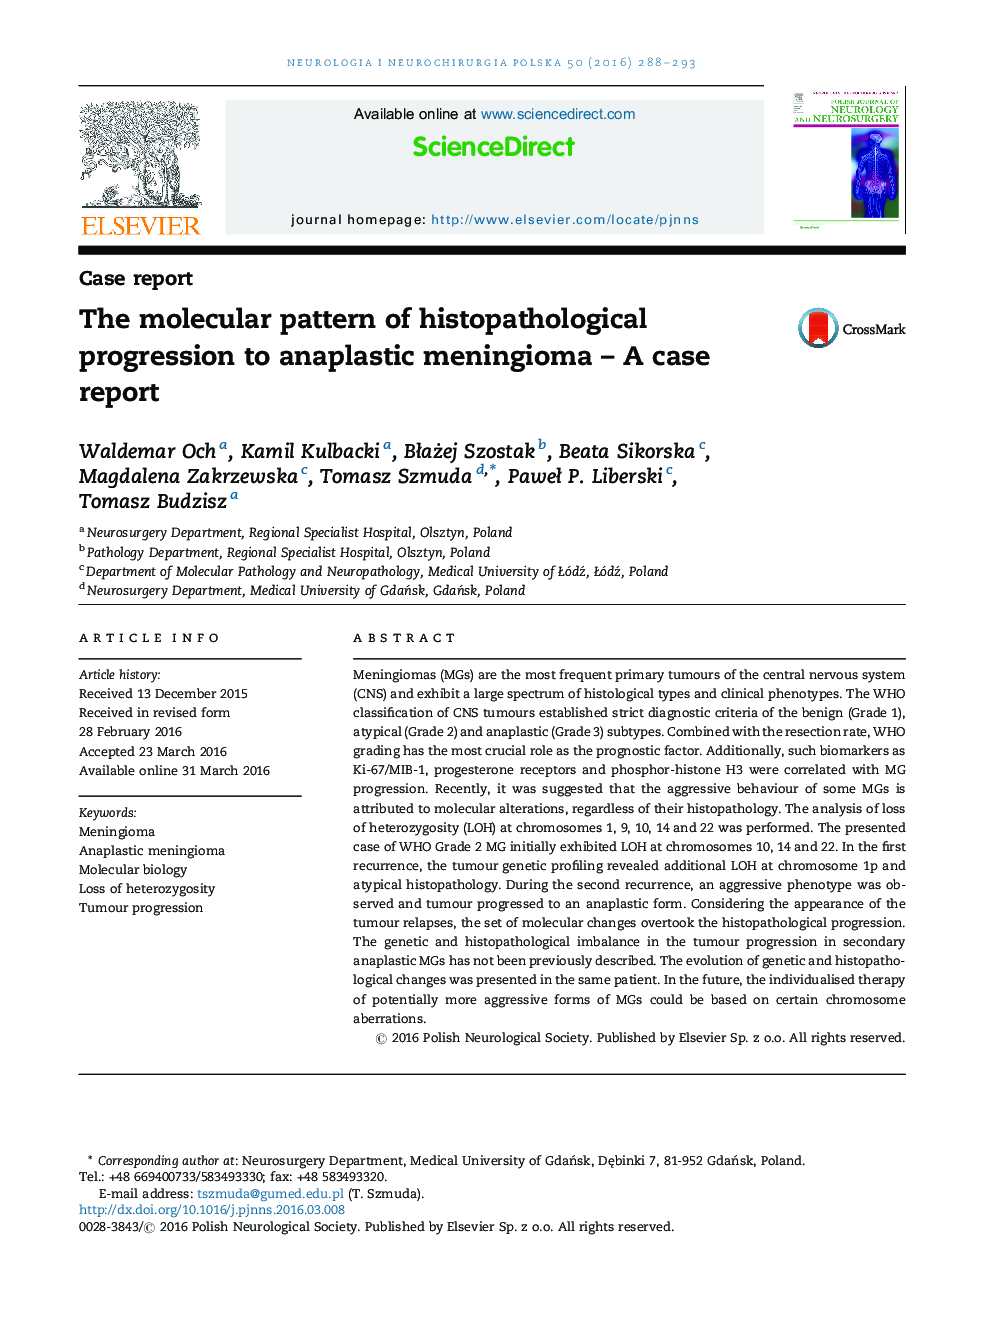 The molecular pattern of histopathological progression to anaplastic meningioma – A case report